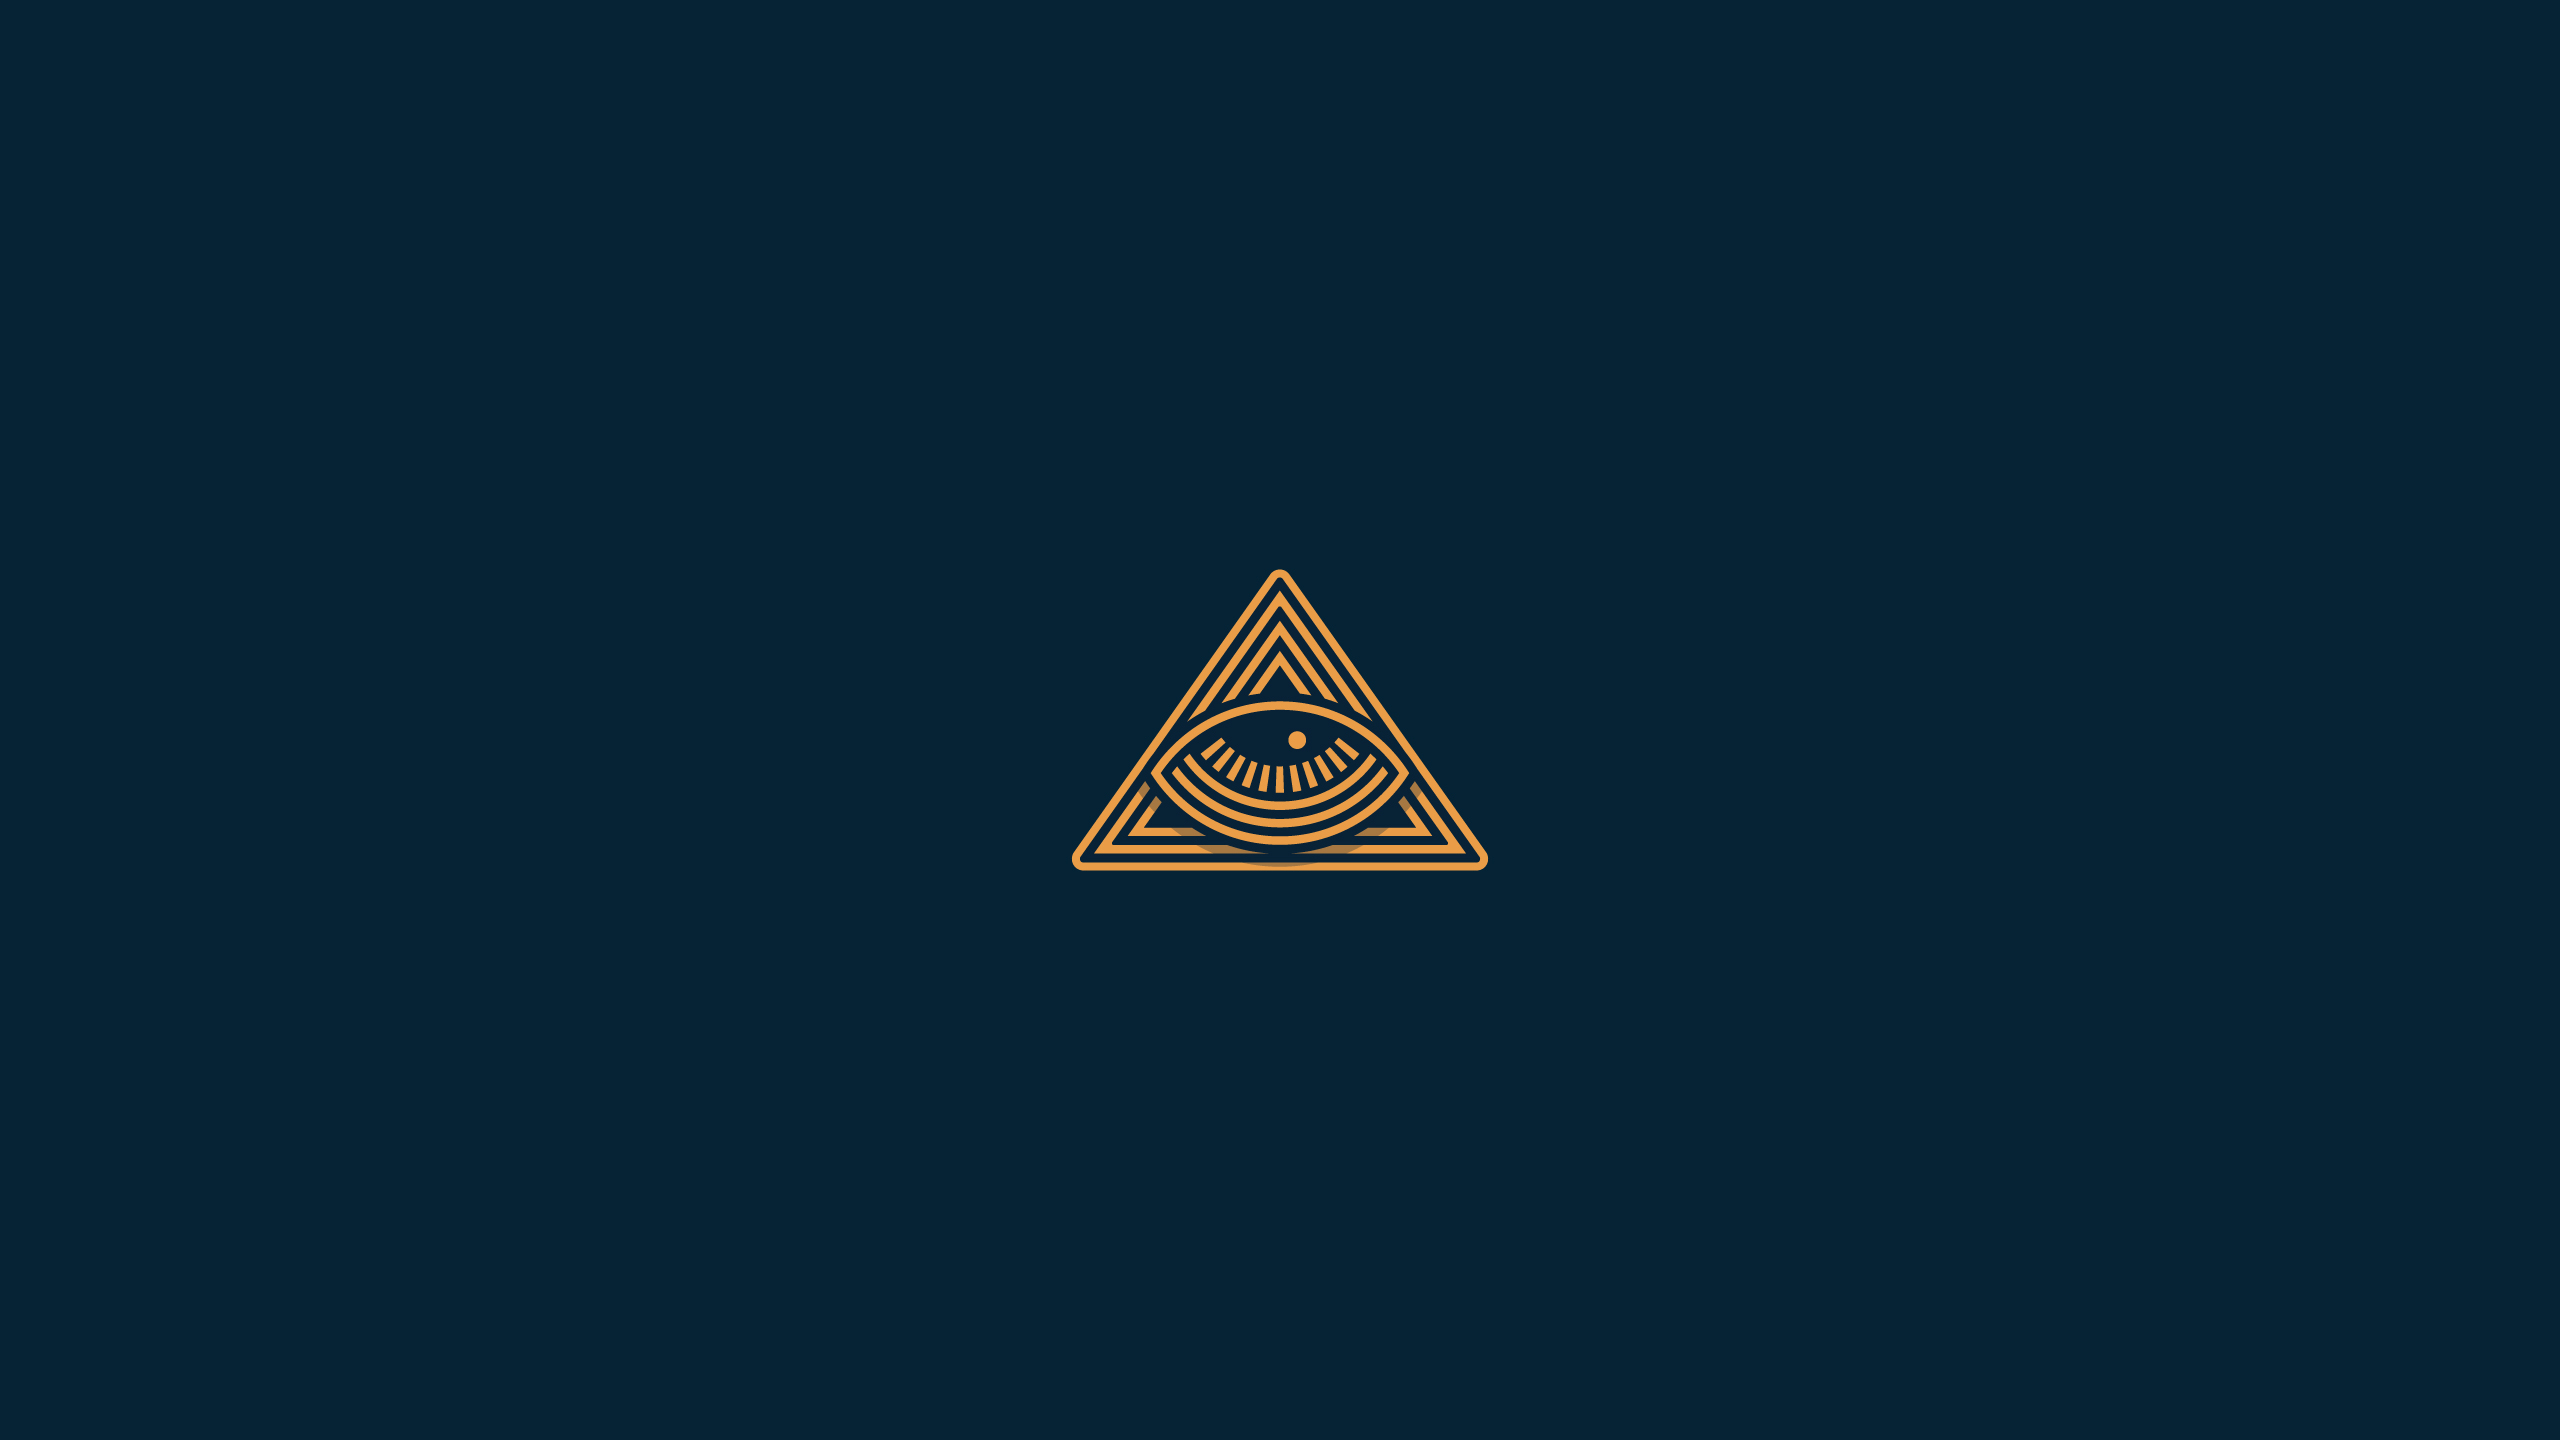 Graphic Design Blue Background Illuminati Pyramid The All Seeing Eye 2560x1440